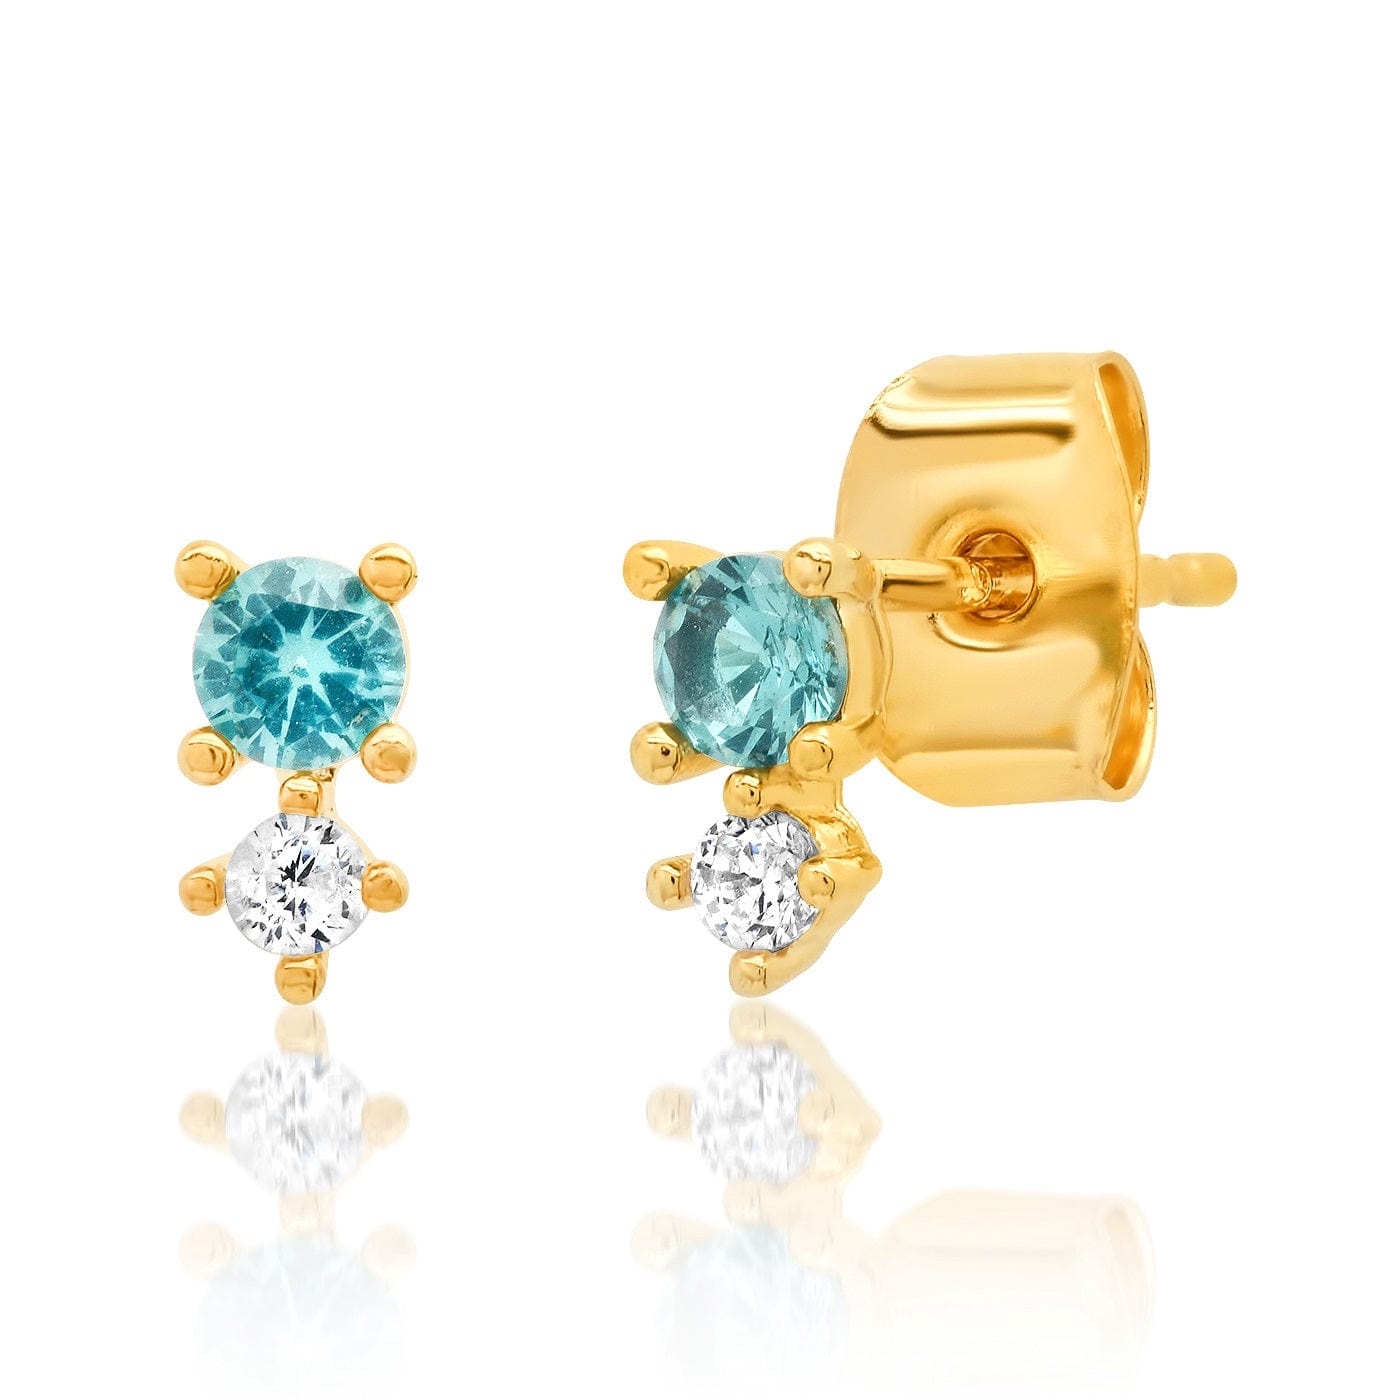 TAI JEWELRY Earrings Aqua Cz And Colored Stone Studs